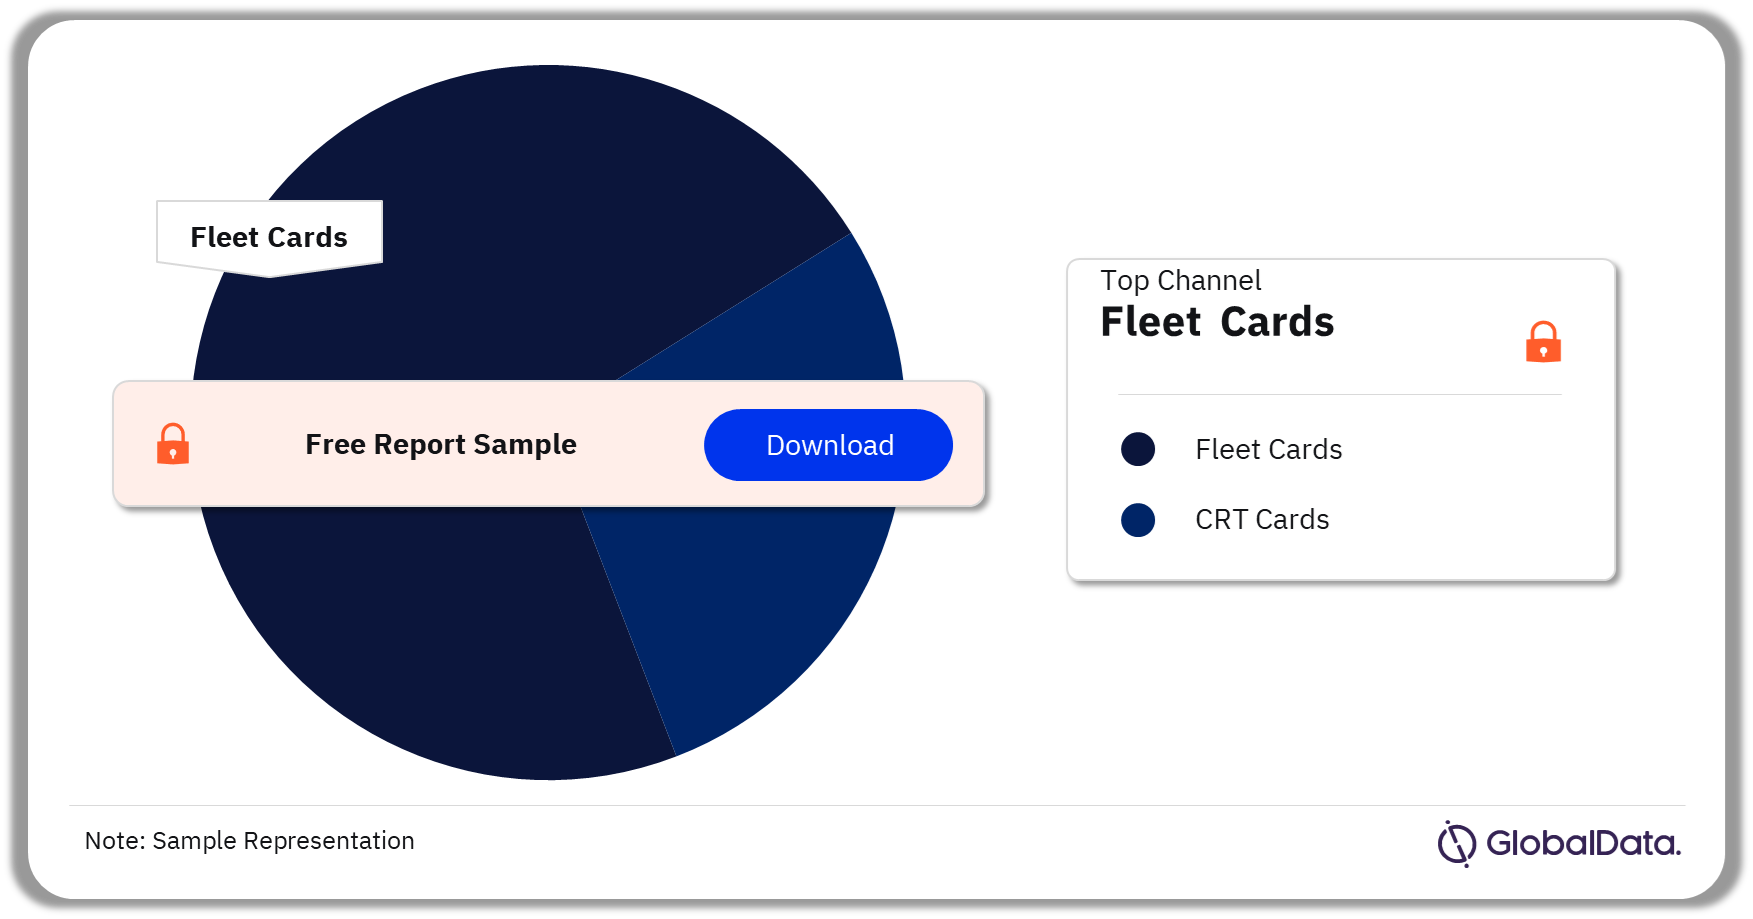 Switzerland Fuel Cards Market Analysis by Channels, 2022 (%)